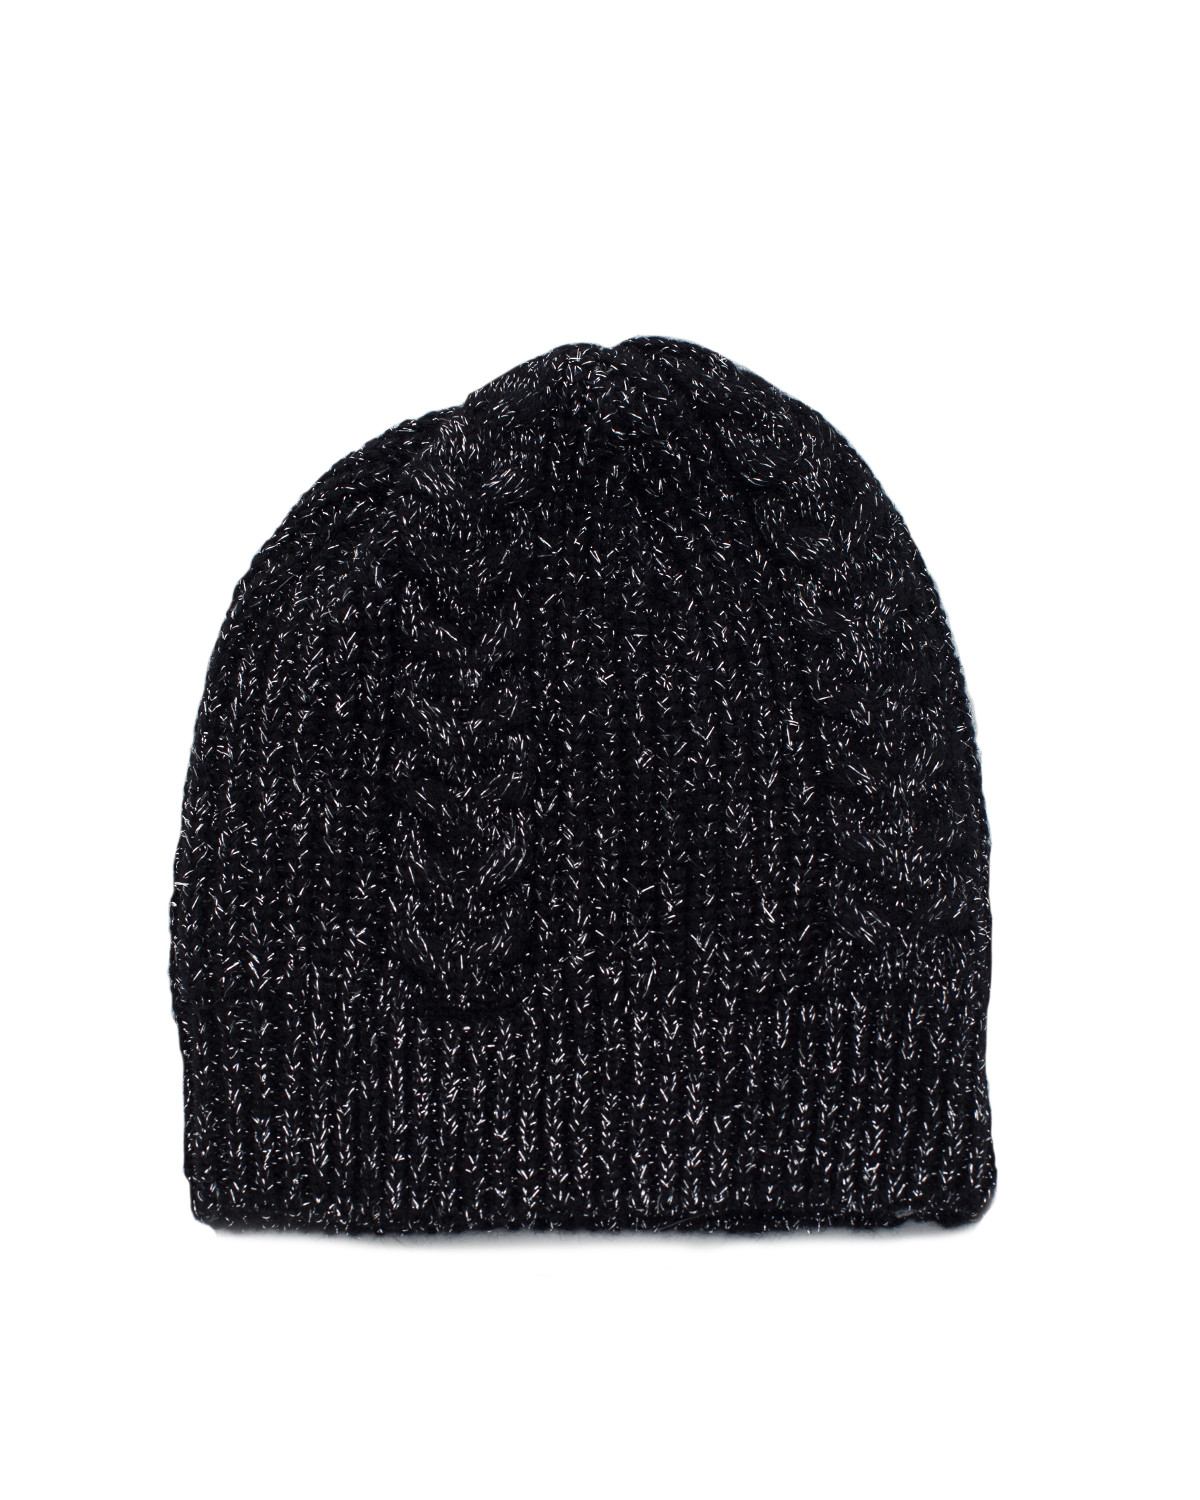 Black knit hat